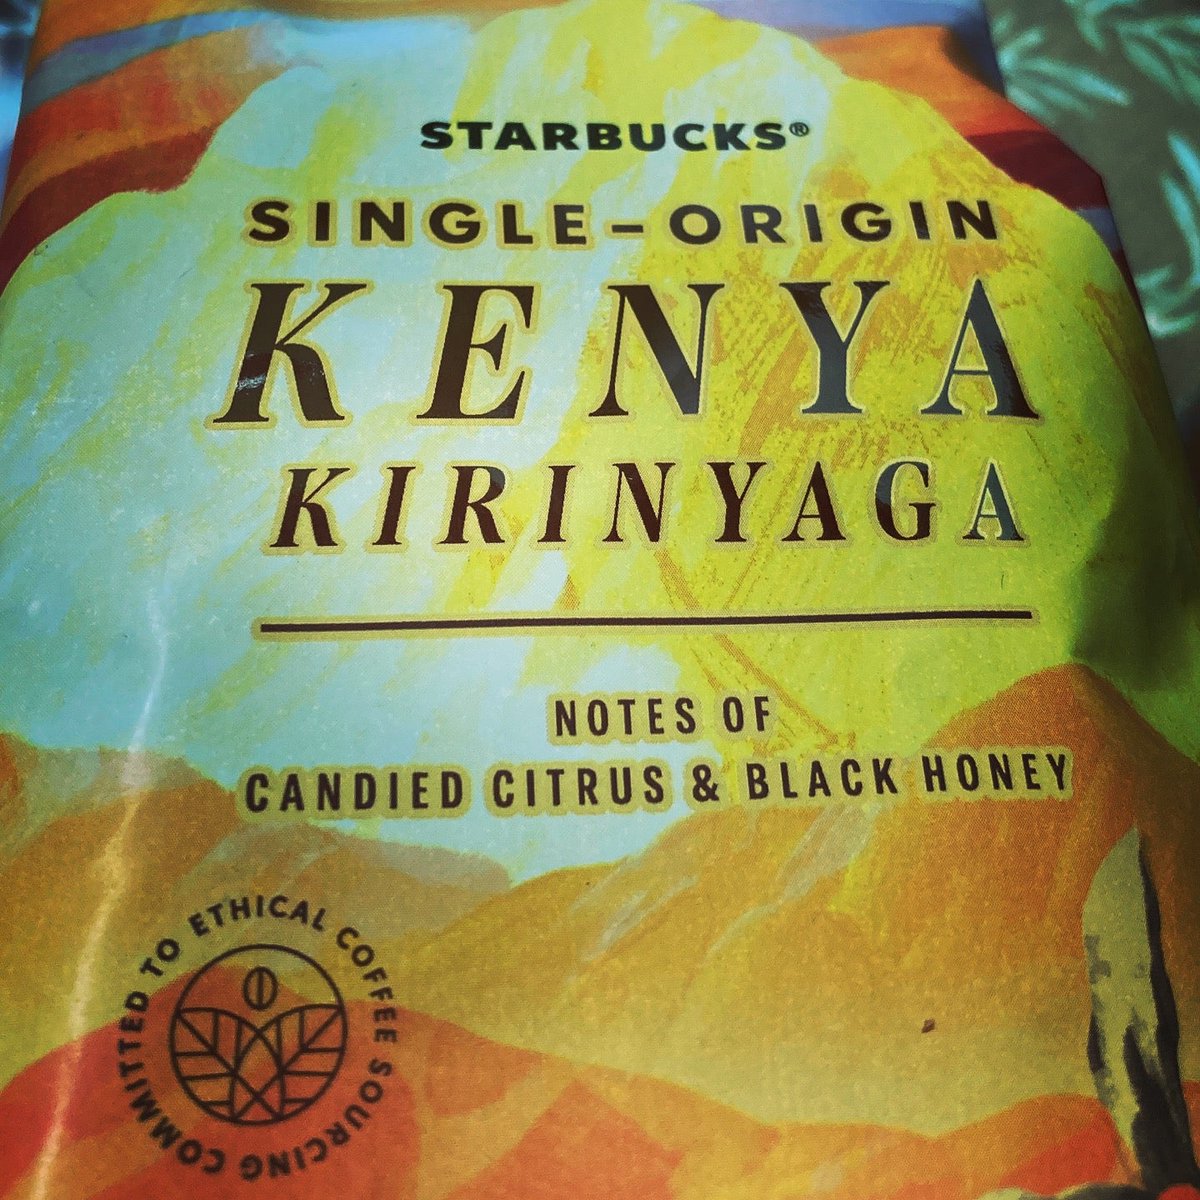 Let’s begin another journey #starbucks #kenya #kirinyaga #singleorigin #candied #citrus #black #honey #mediumroast #photoadayjune (@ บ้านฉายากุล บางพลัด in Bang Phlat, Bangkok) swarmapp.com/c/dNO0Ra50Emk